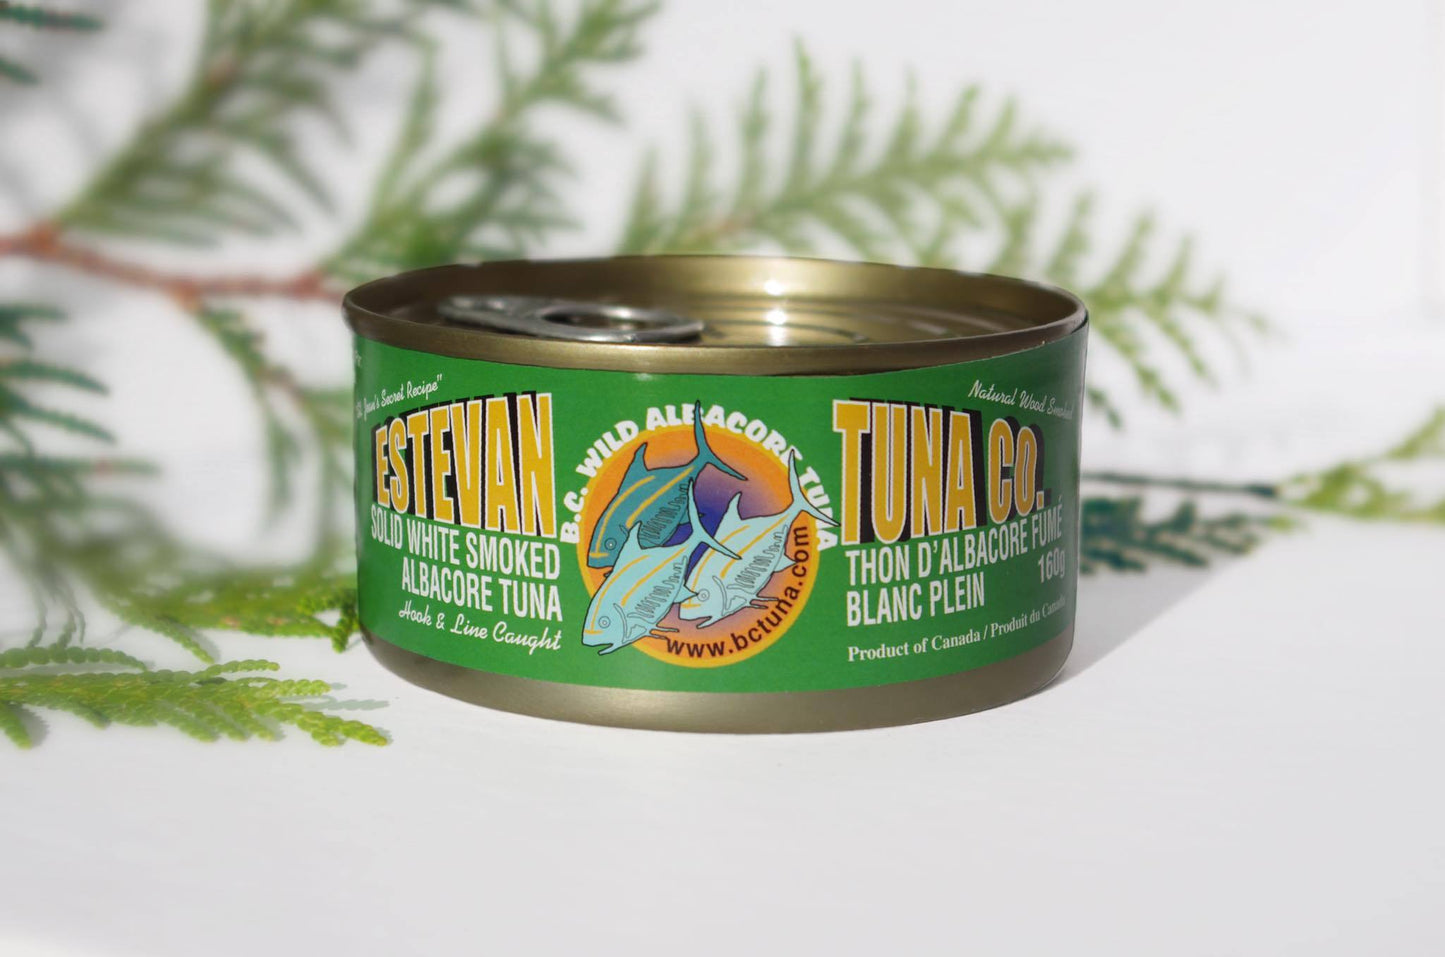 Smoked or Regular solid white Tuna